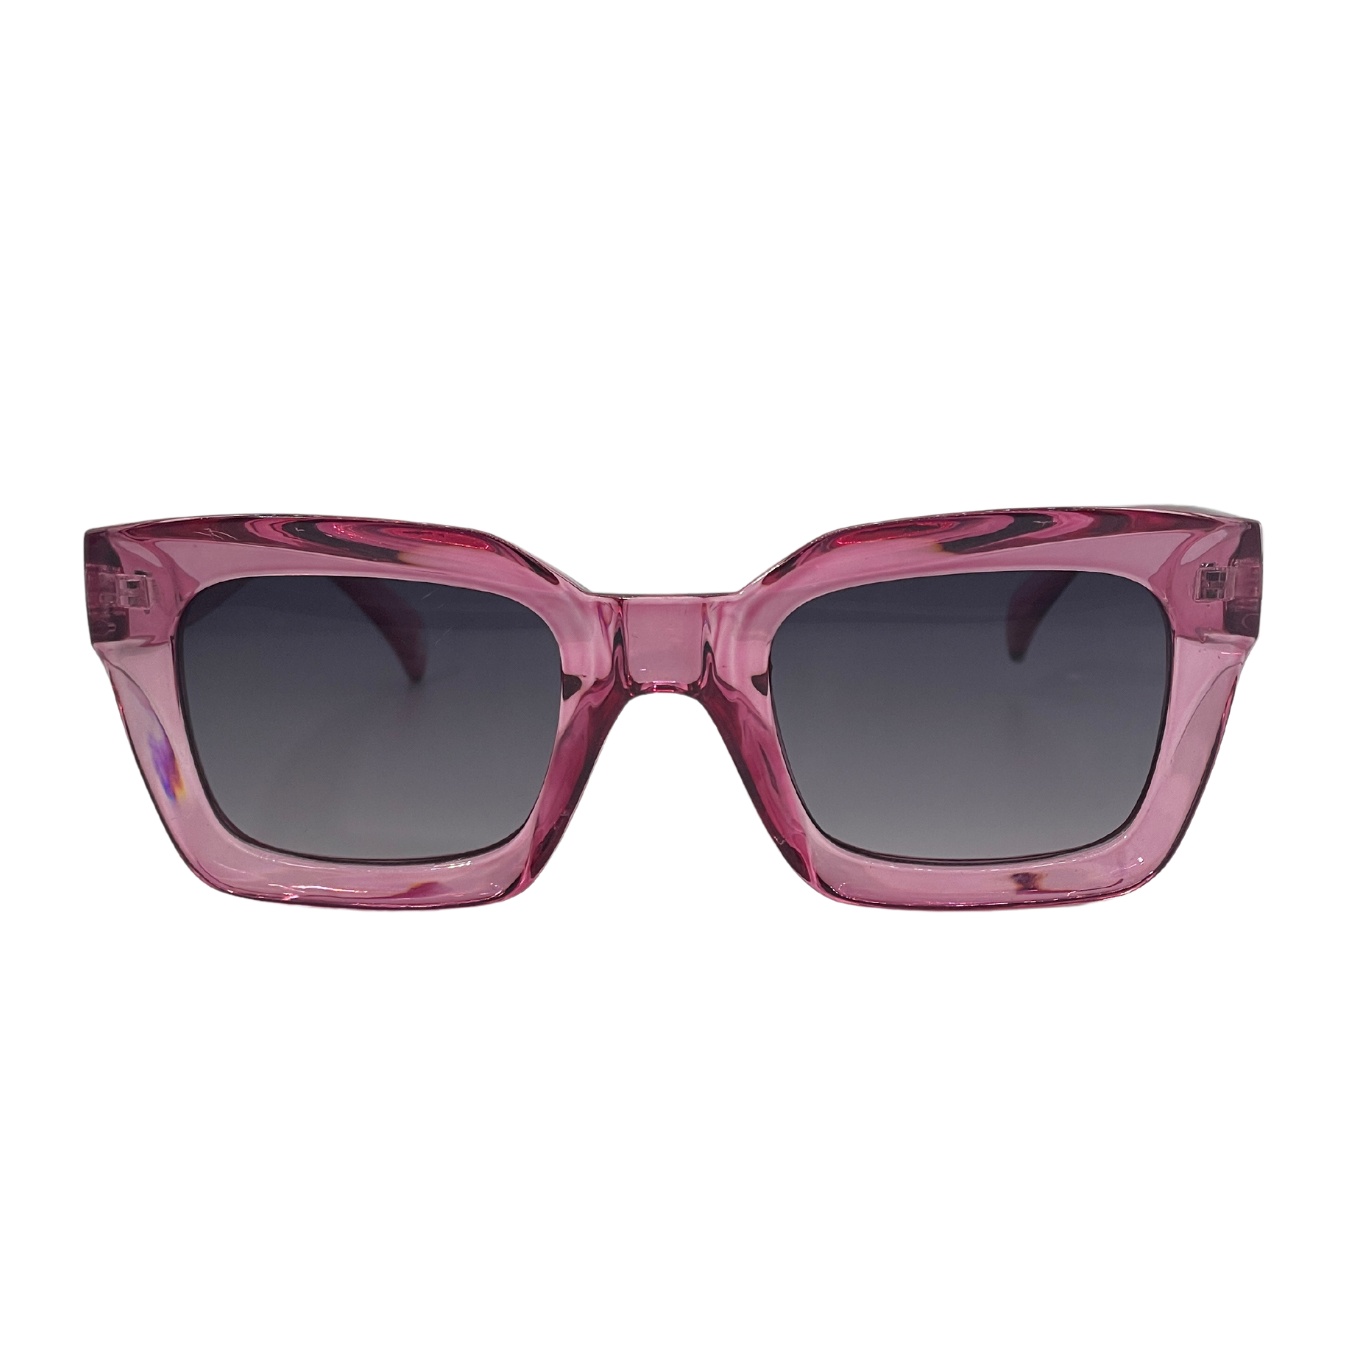 Bayside Pink - Square Sunglasses - Woodensun Sunglasses | Eco-fashion eyewear